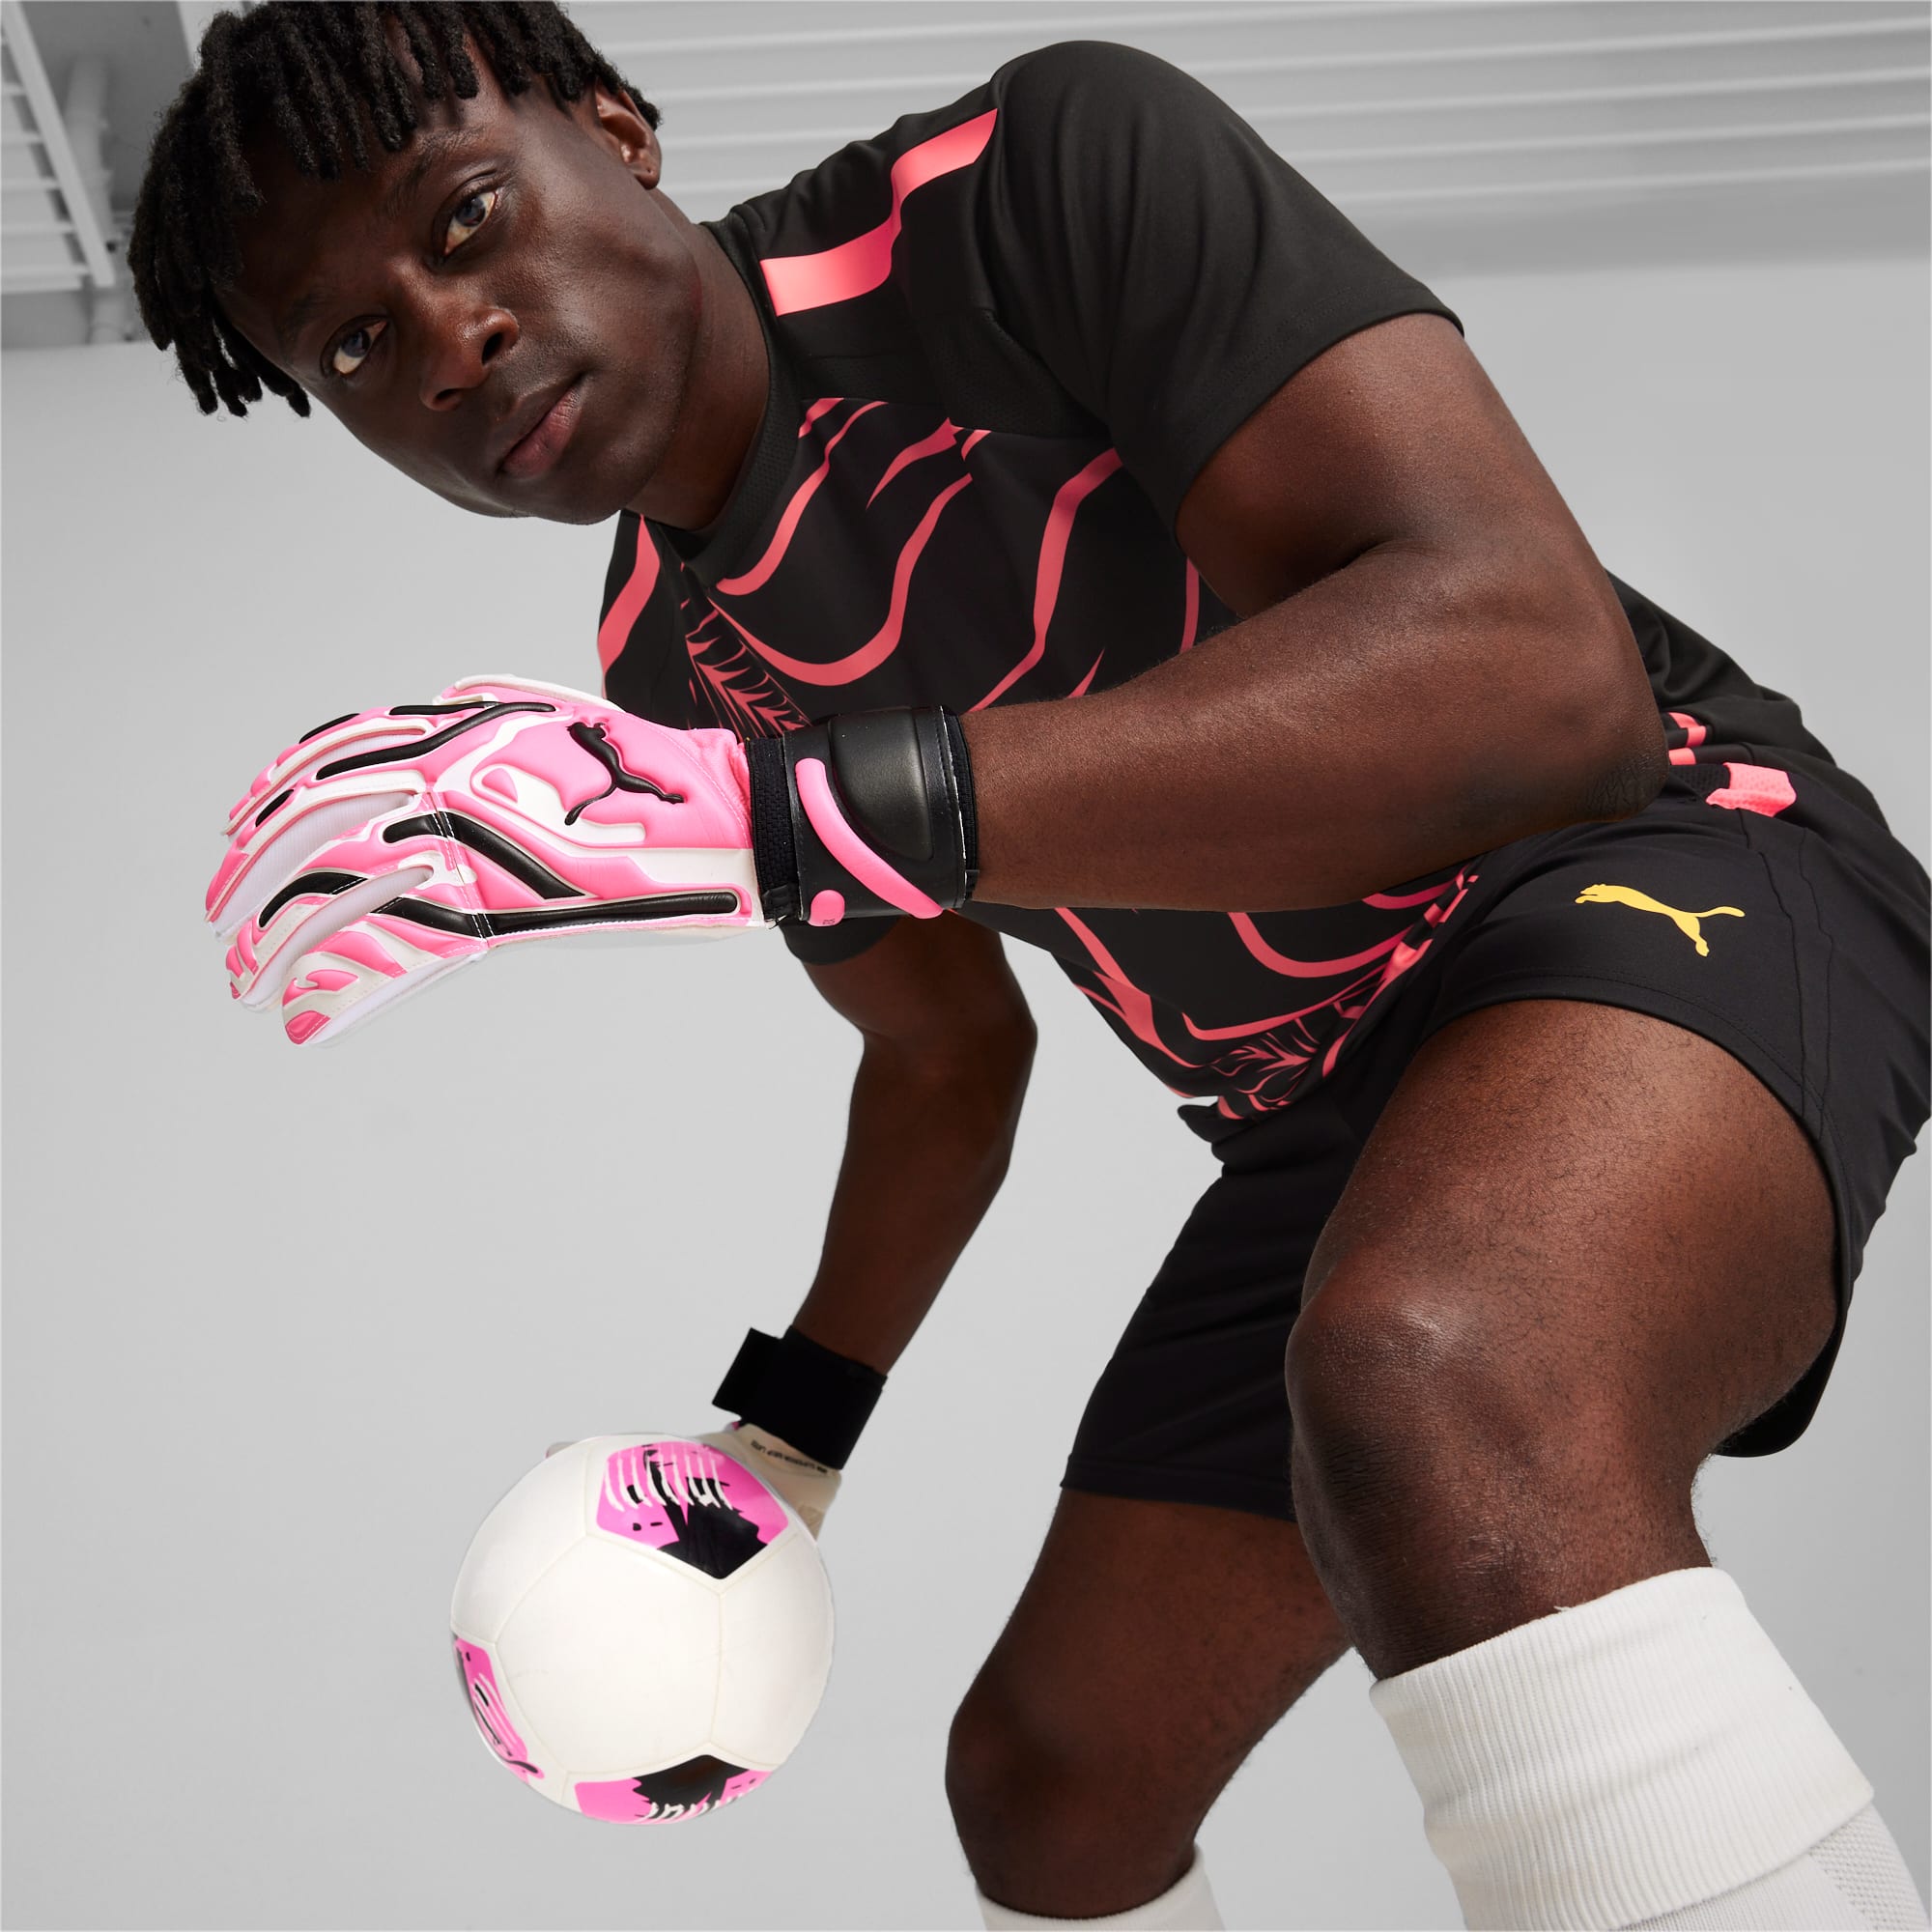 Women's PUMA Ultra Pro Rc Goalkeeper Gloves, Poison Pink/White/Black, Size 11, Accessories